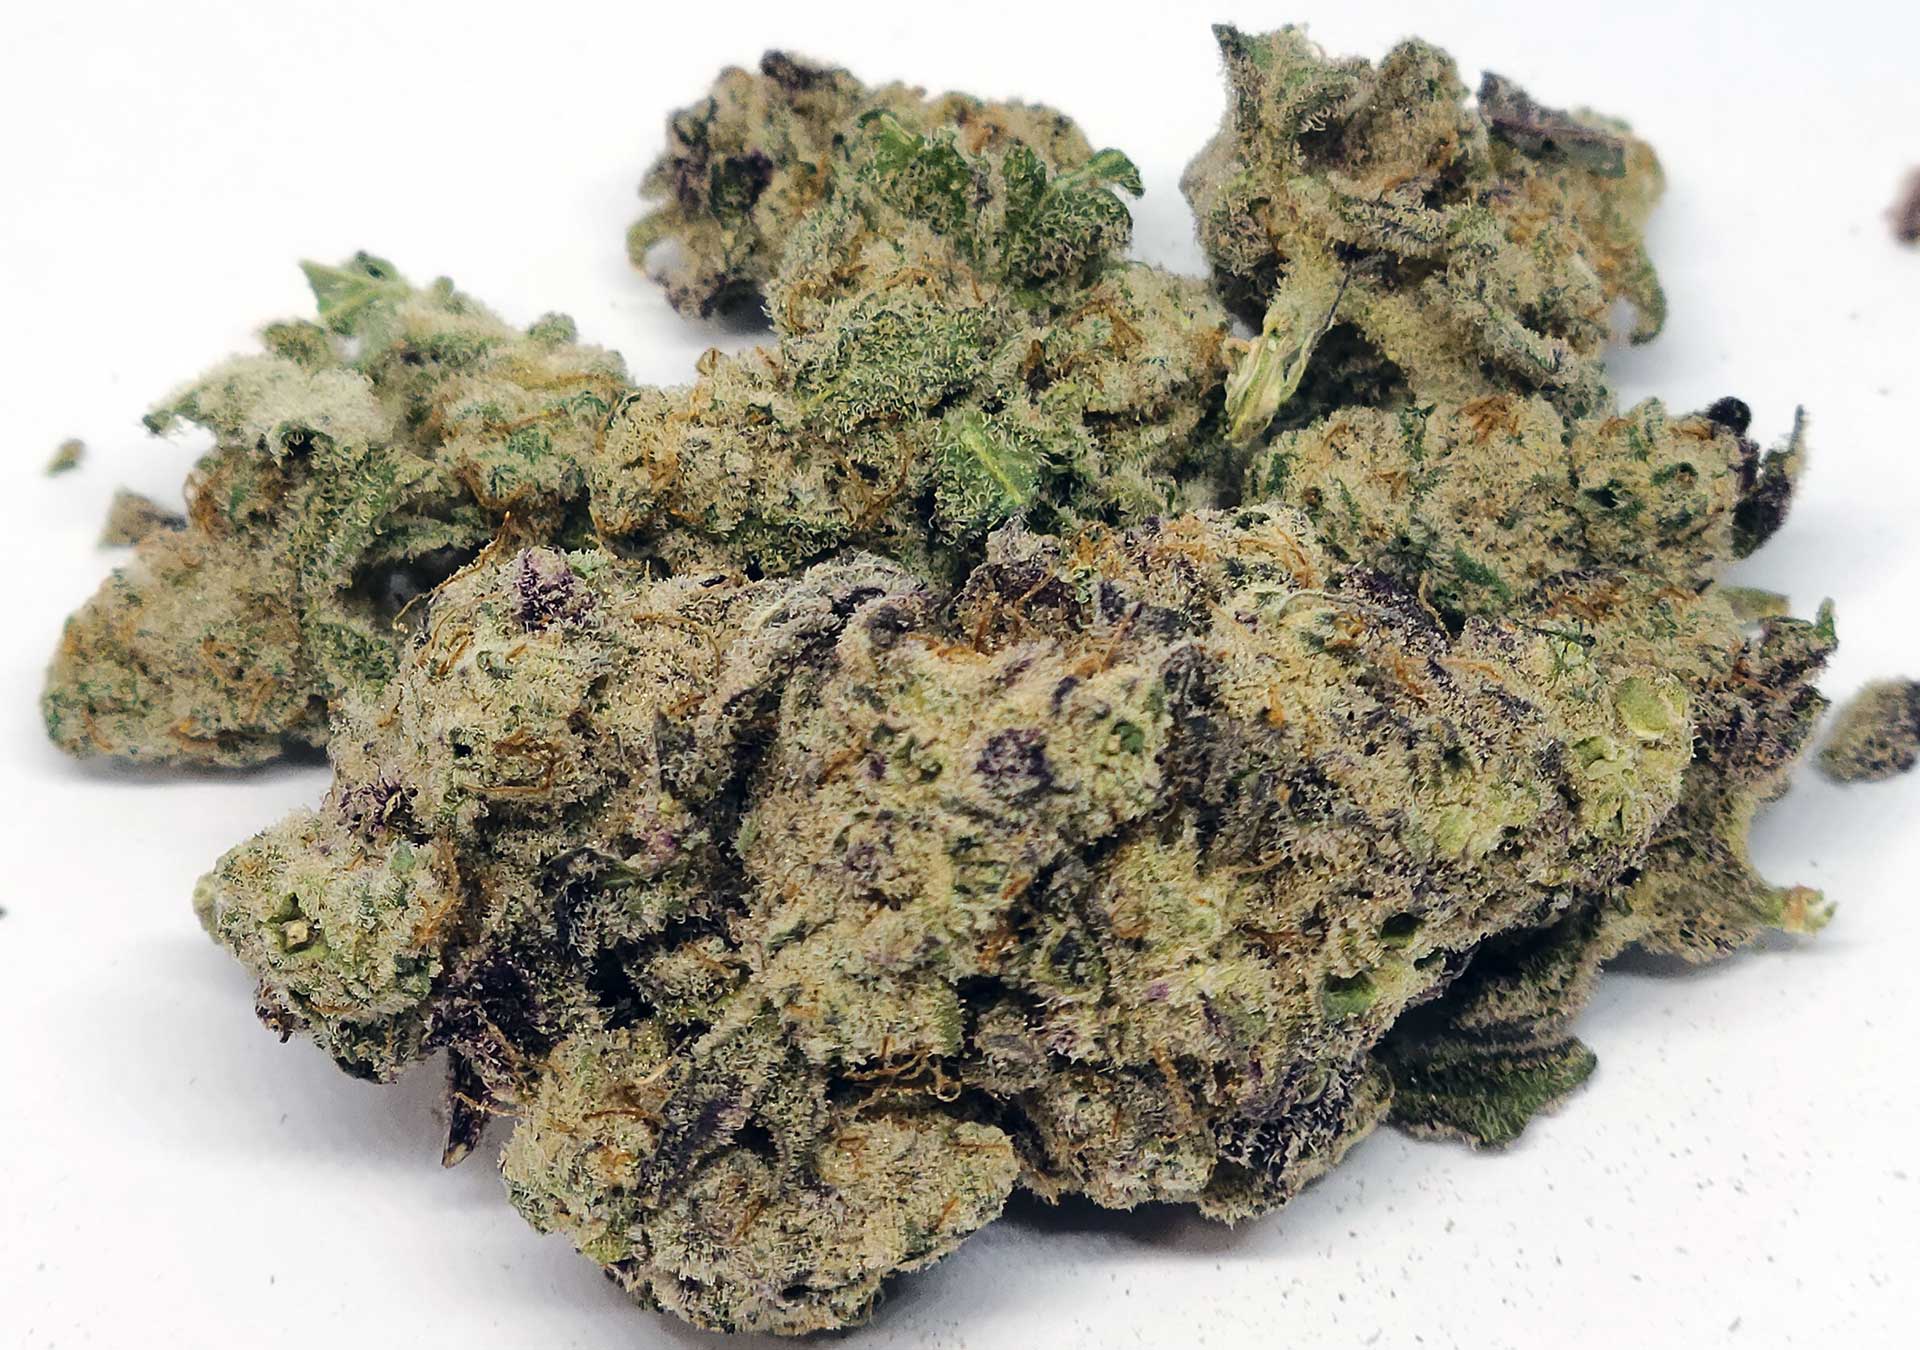 citizen stash mac 1 cannabis review